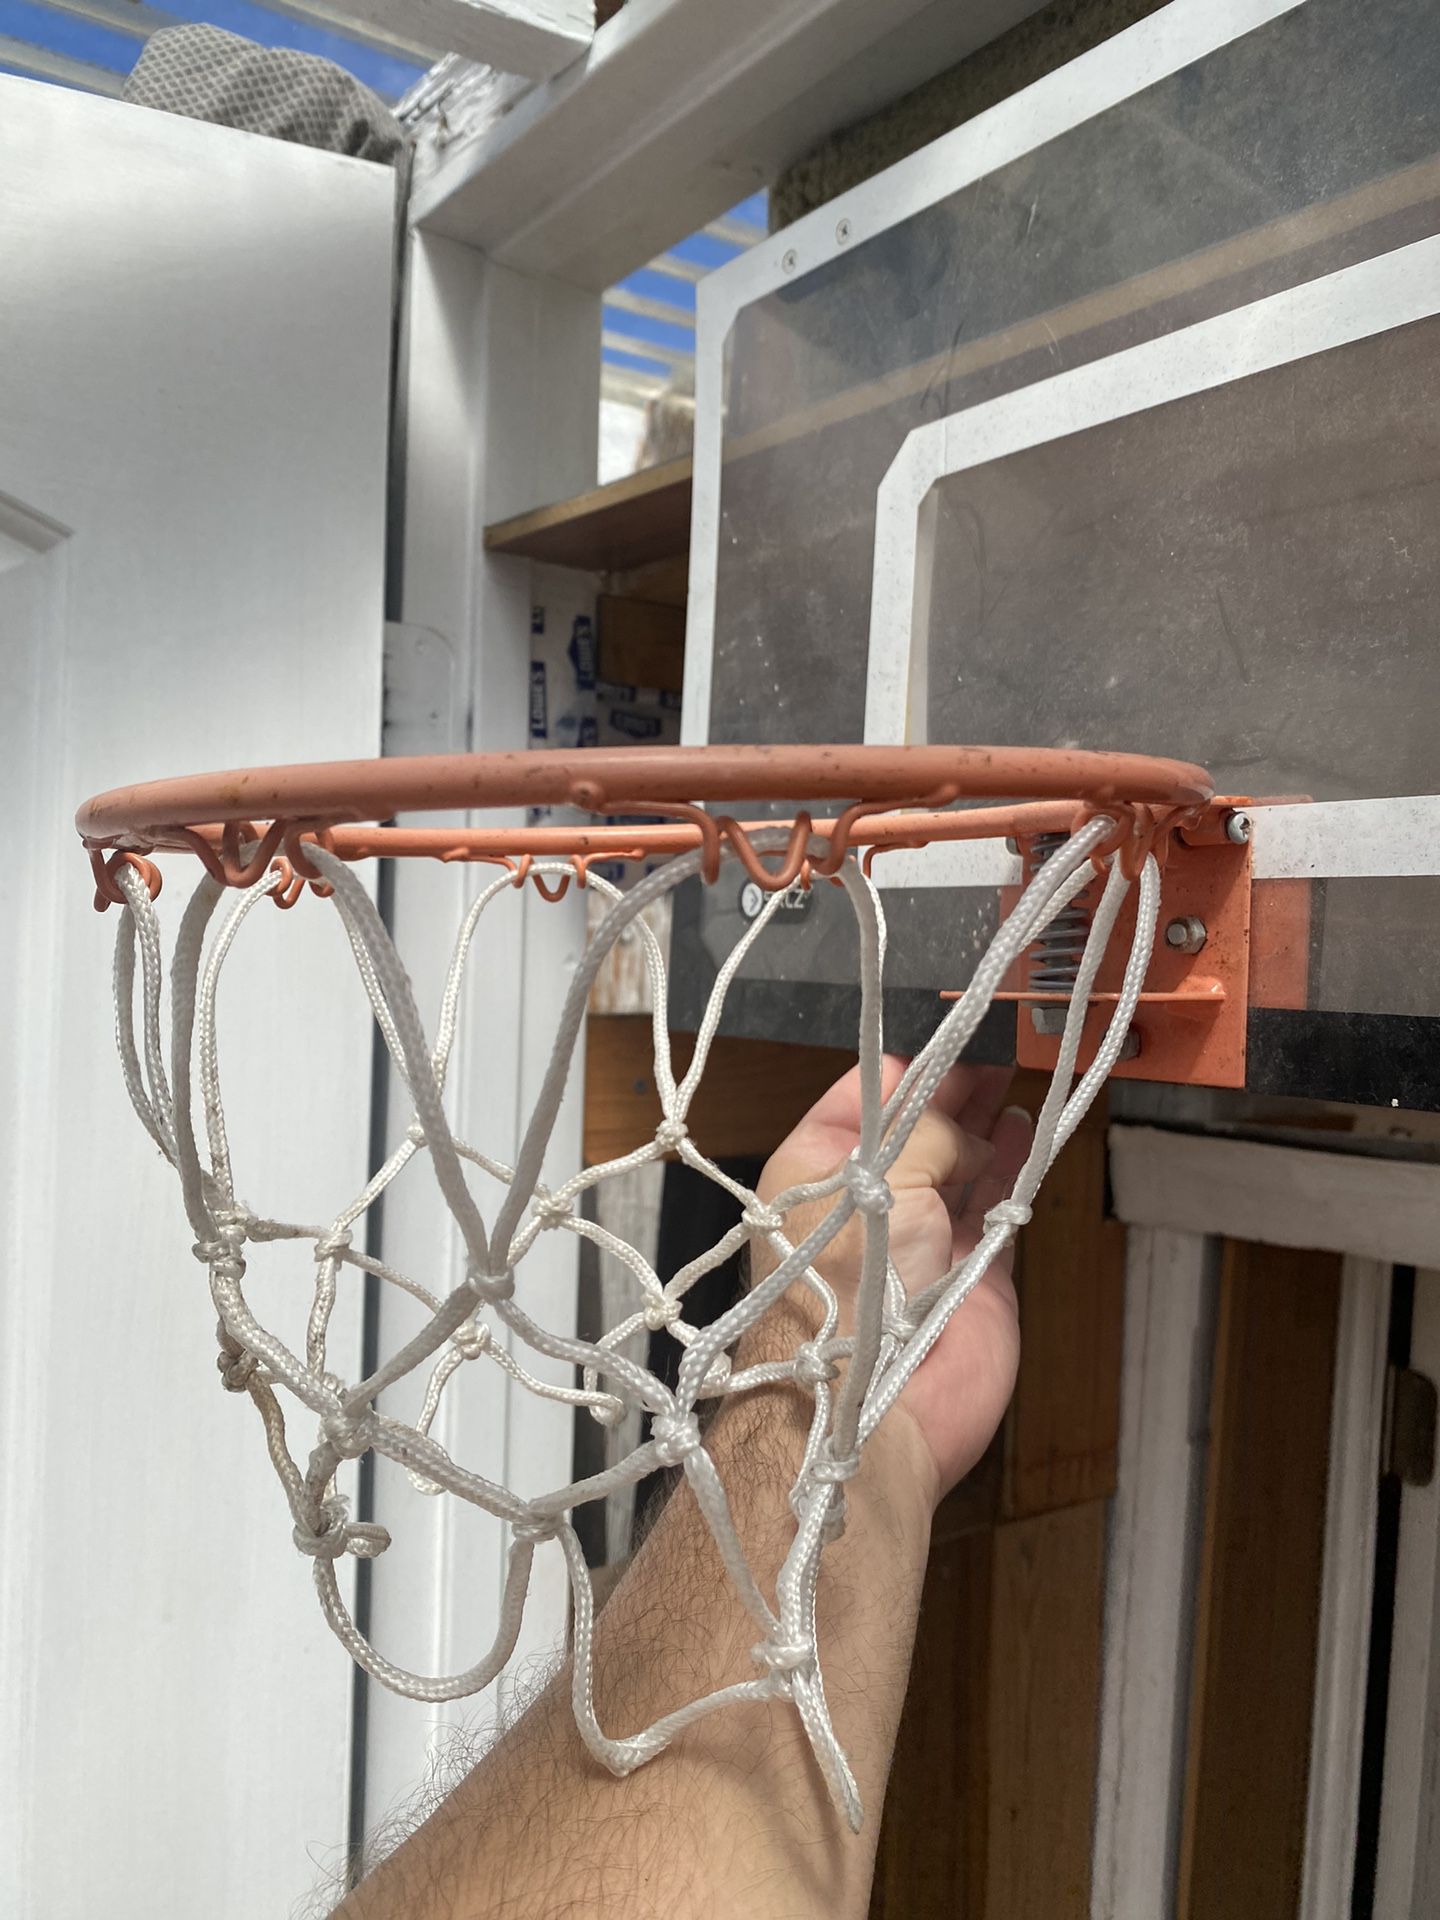 Mini Basketball Hoop for sale